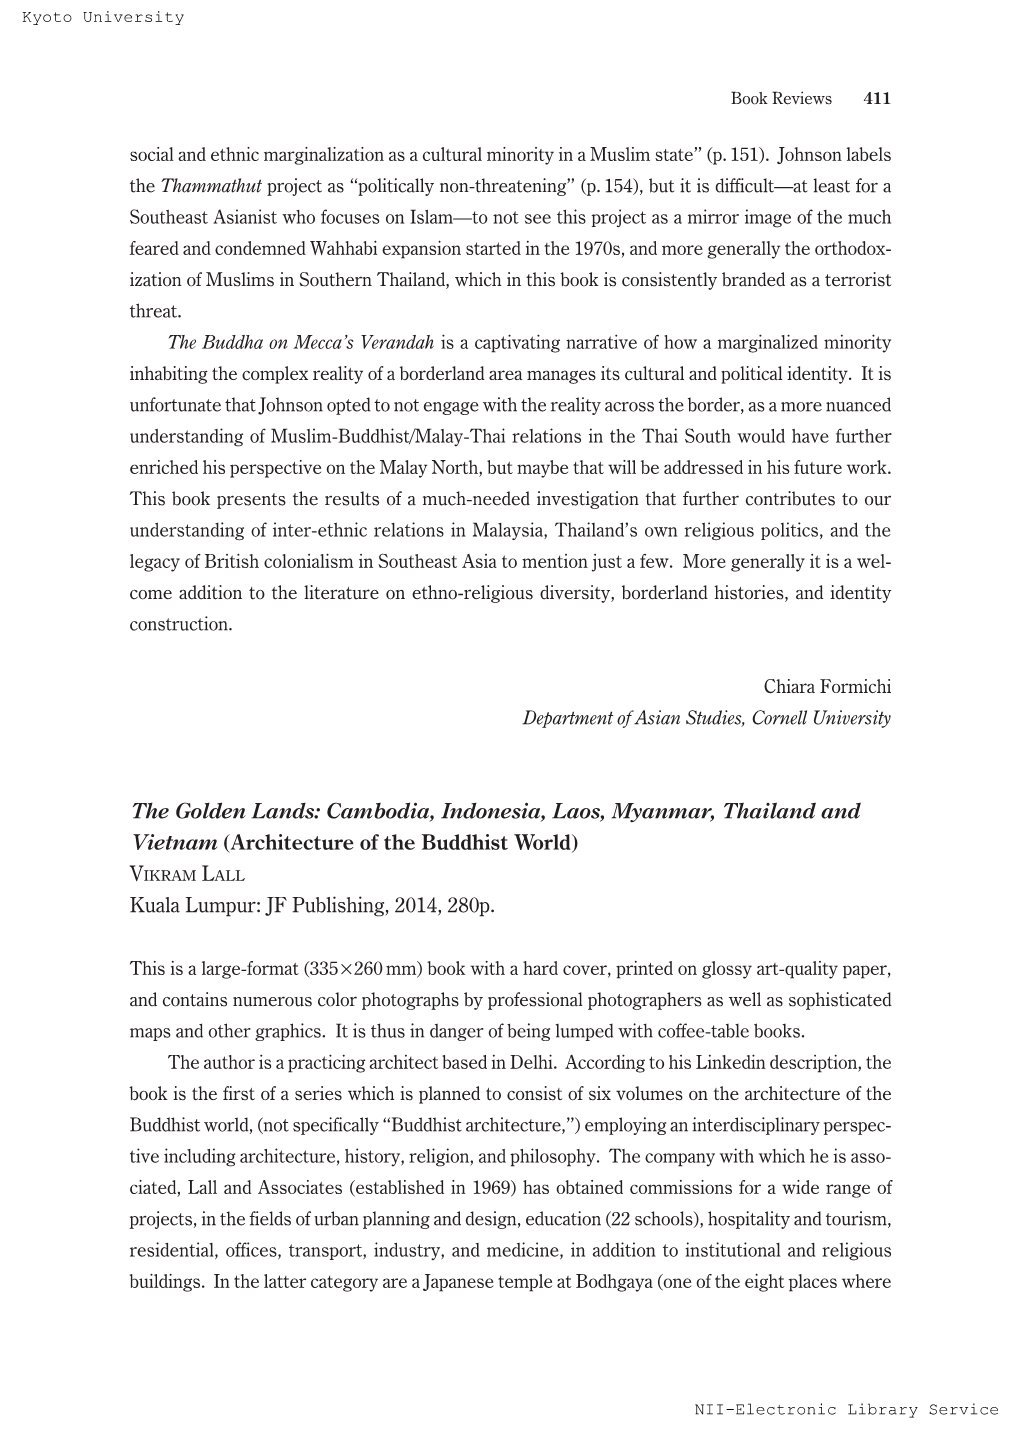 Cambodia, Indonesia, Laos, Myanmar, Thailand and Vietnam (Architecture of the Buddhist World) VIKRAM LALL Kuala Lumpur: JF Publishing, 2014, 280P